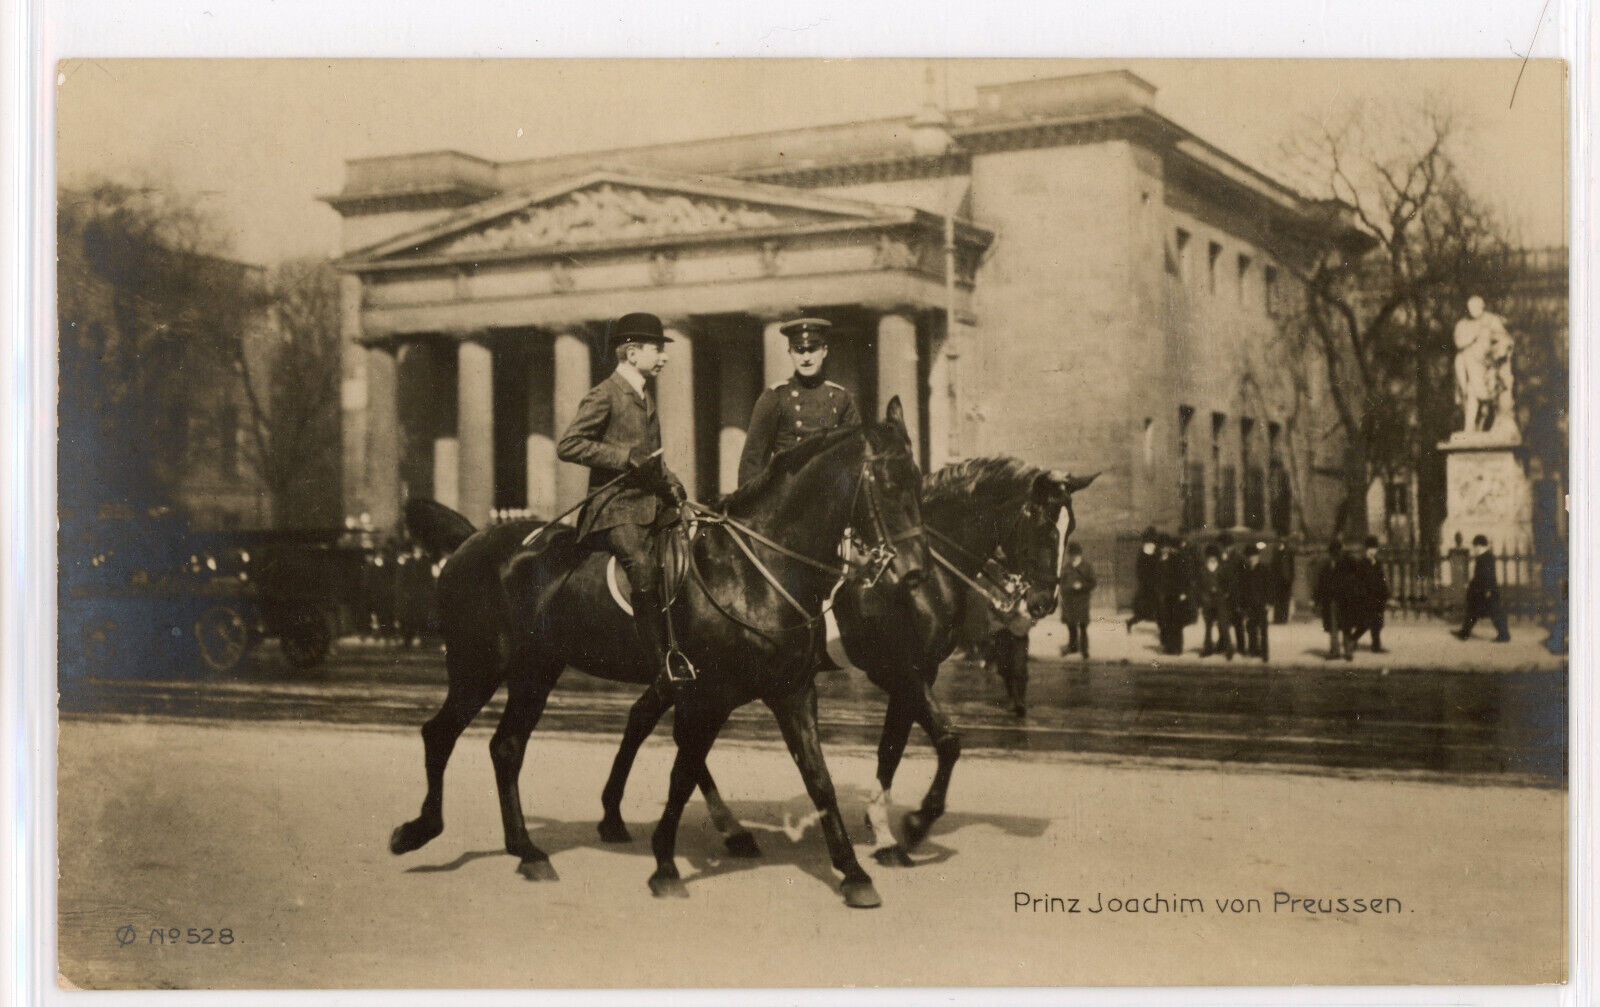 Prince Joaquim of Prussia, Unter den Linden, Berlin, Germany, vintage postcard